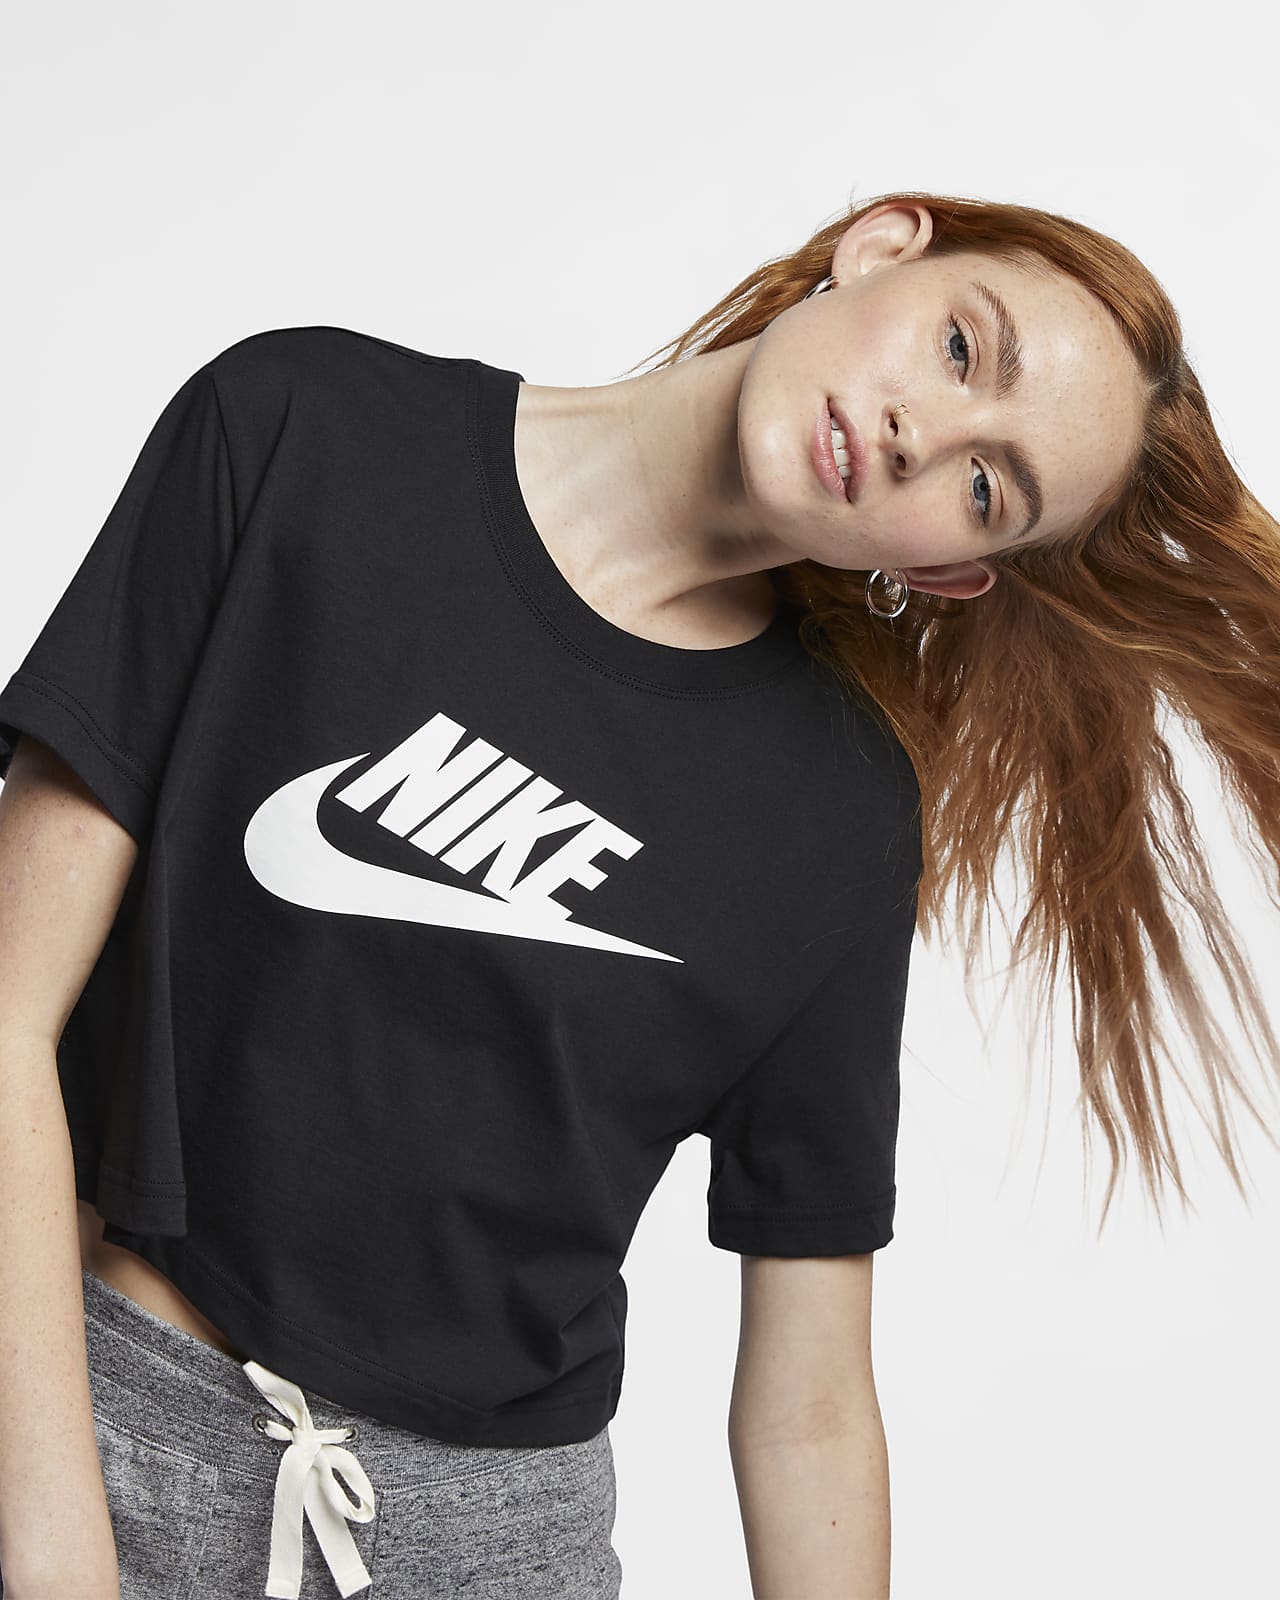 Femmes Nike Pro Hauts et tee-shirts. Nike CH